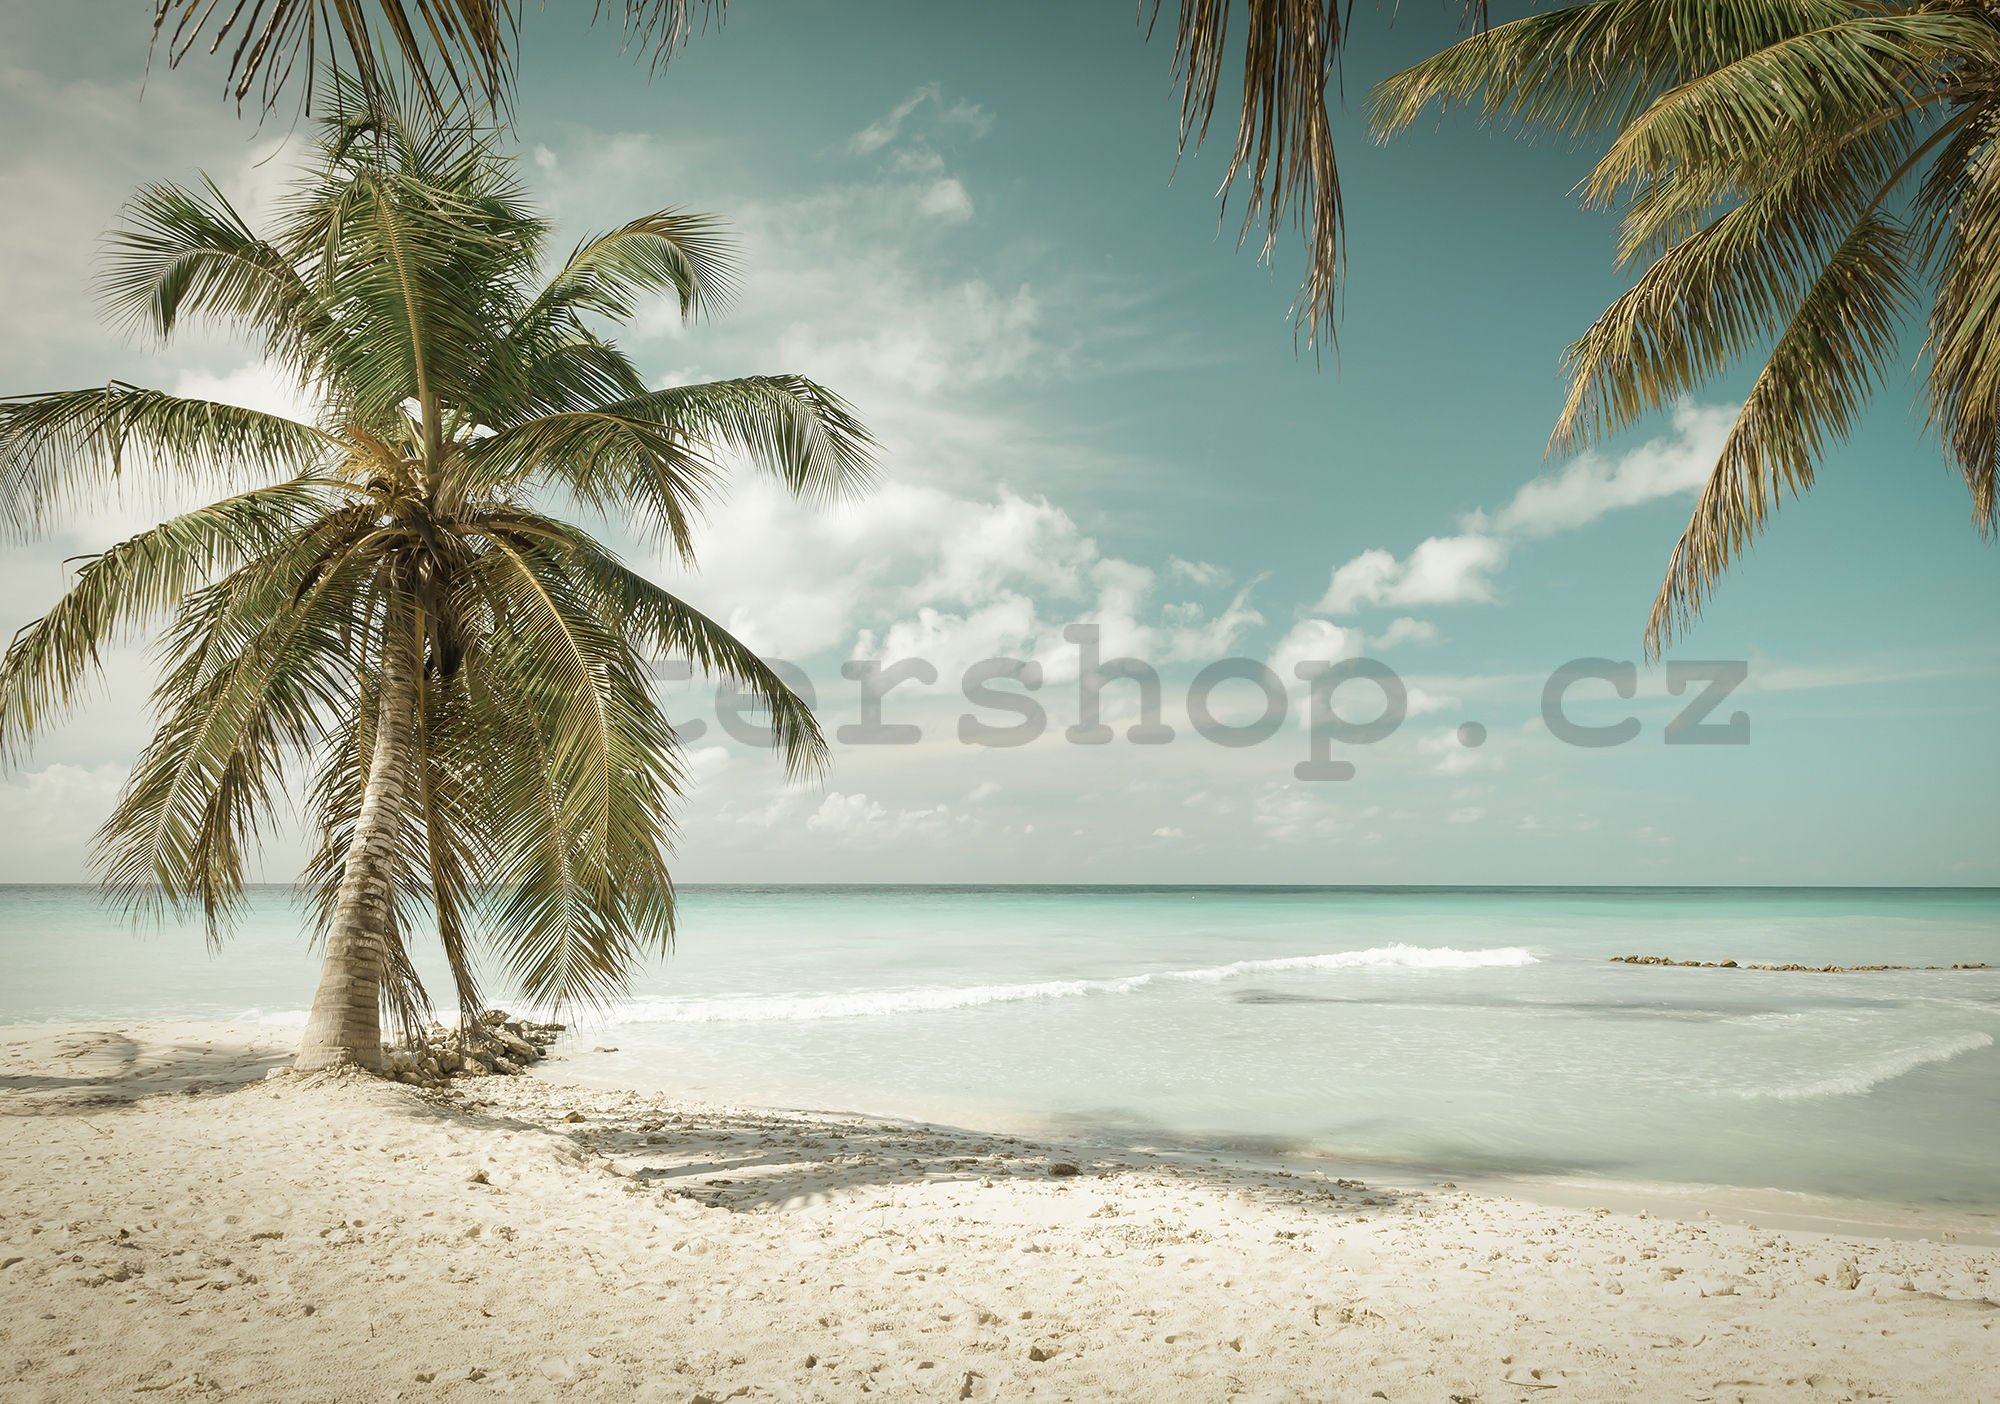 Fototapeta: Palmy nad mořem - 104x152,5 cm